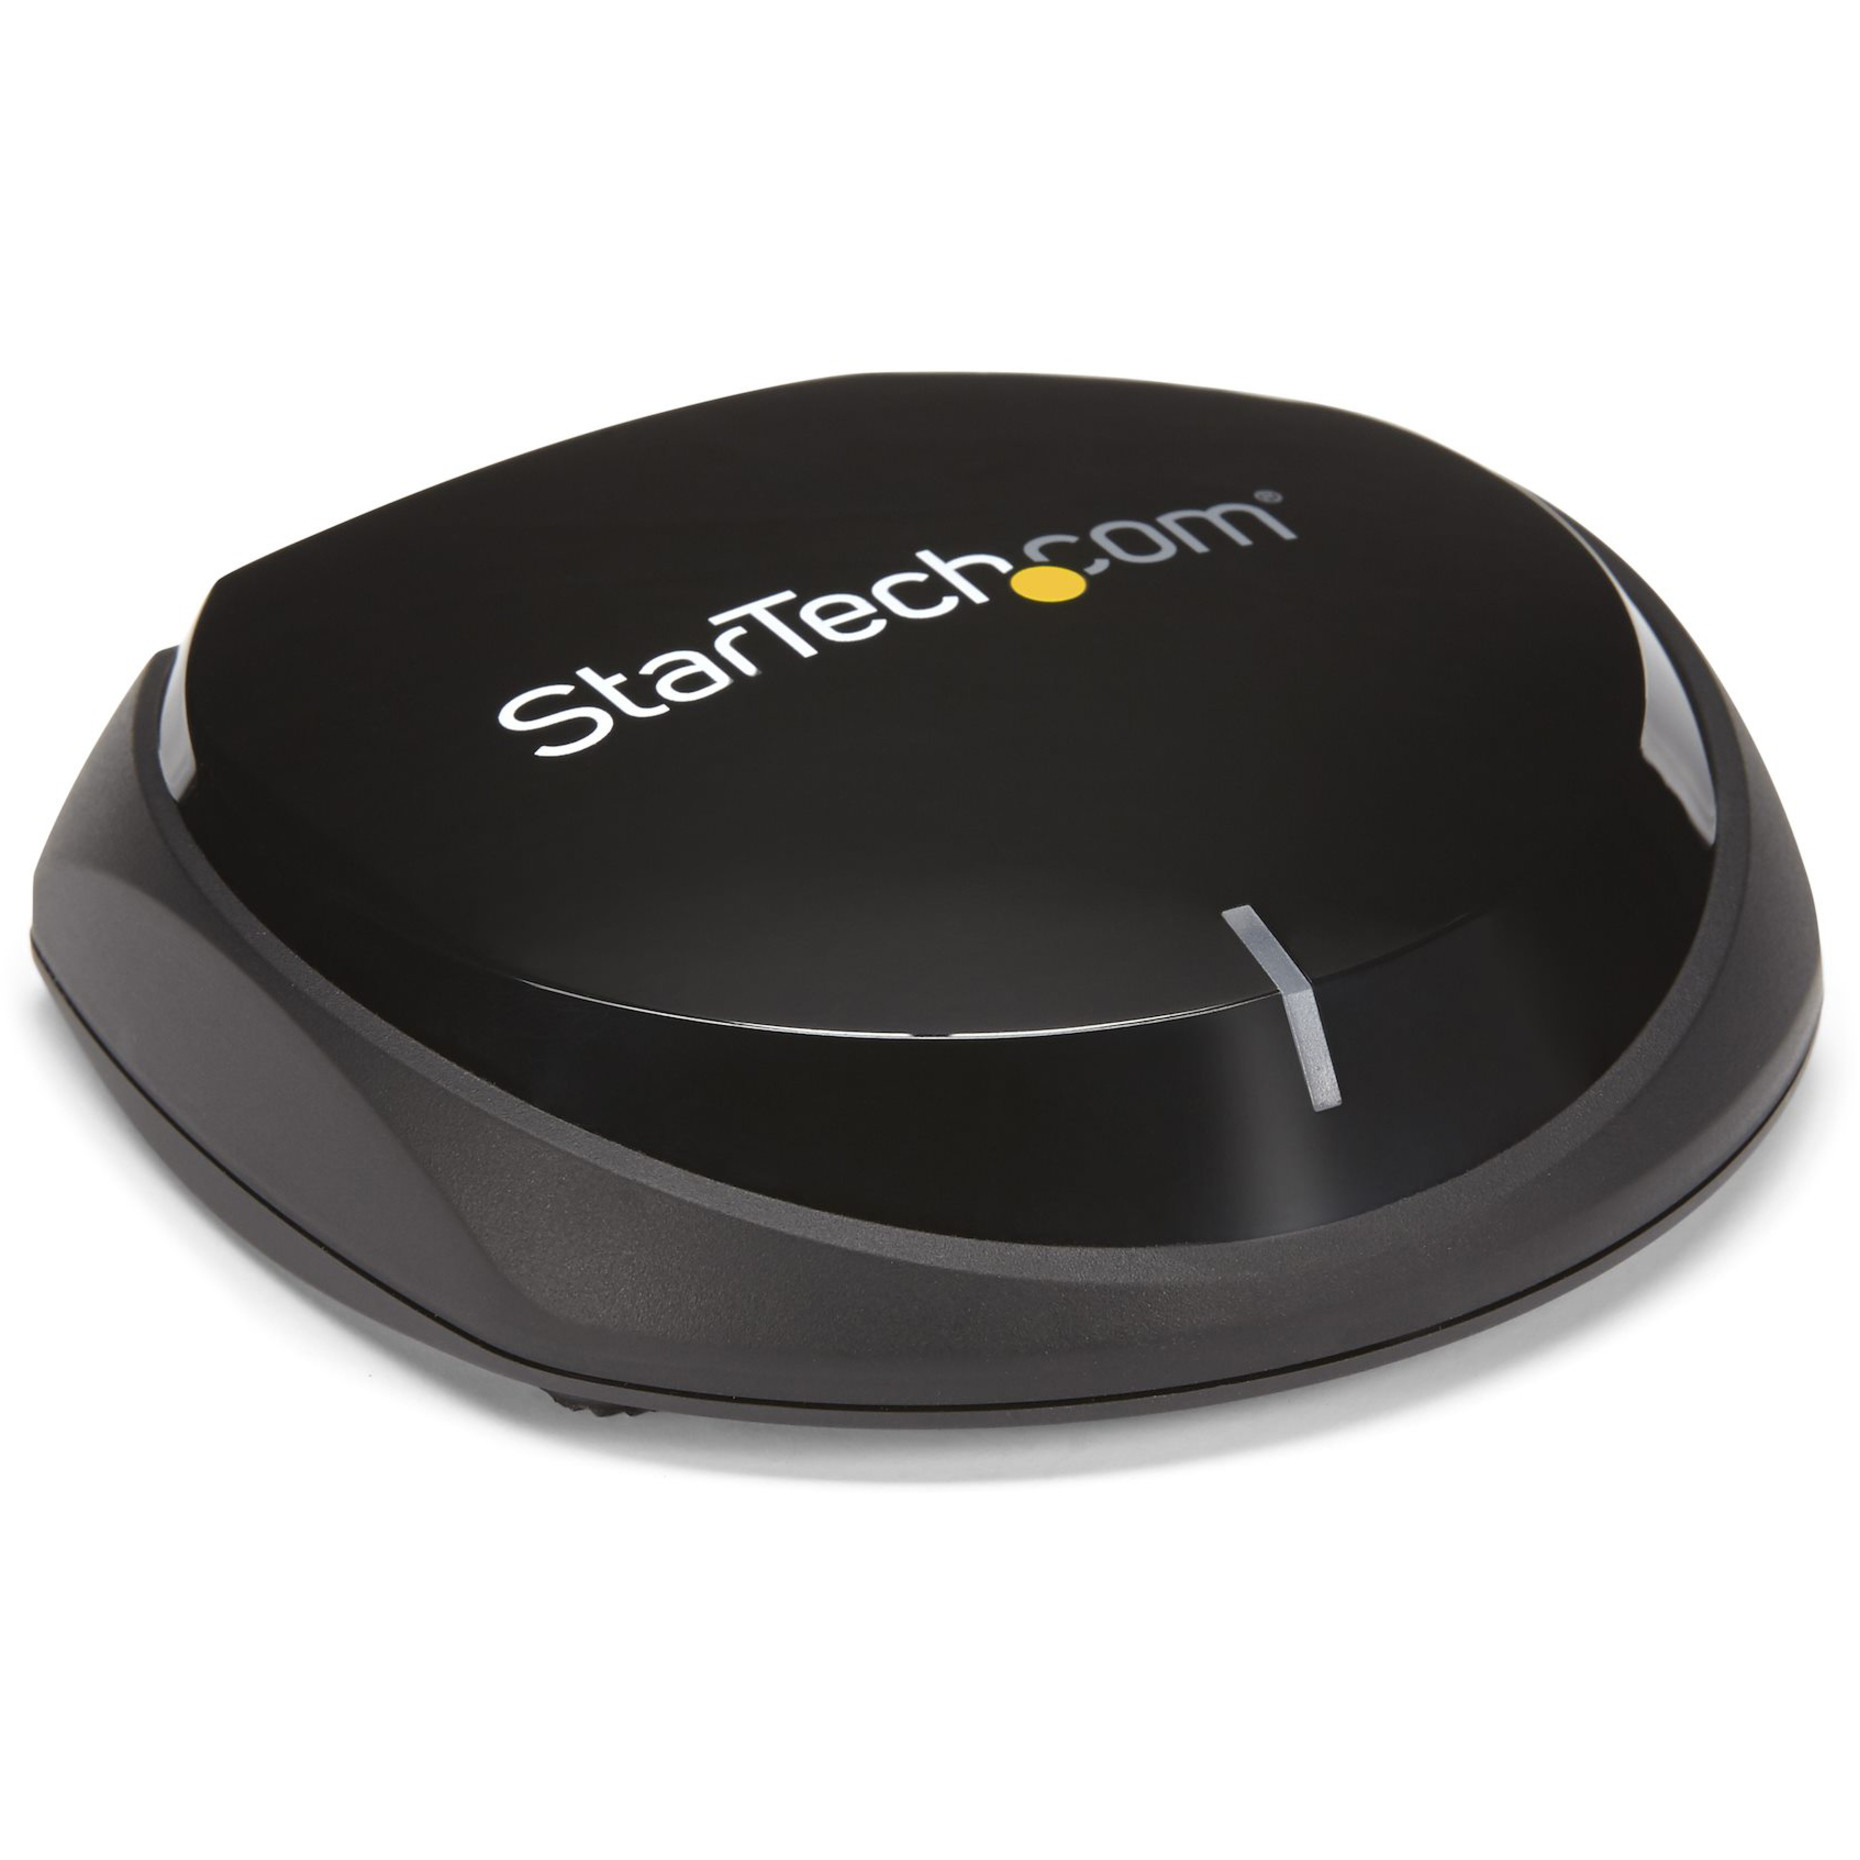 Startech .com Bluetooth 5.0 Audio Receiver NFC, BT/Bluetooth Wireless Audio Adapter, 3.5mm/RCA or Digital Toslink Output, HiFi Wolfson DACBlueto… BT52A